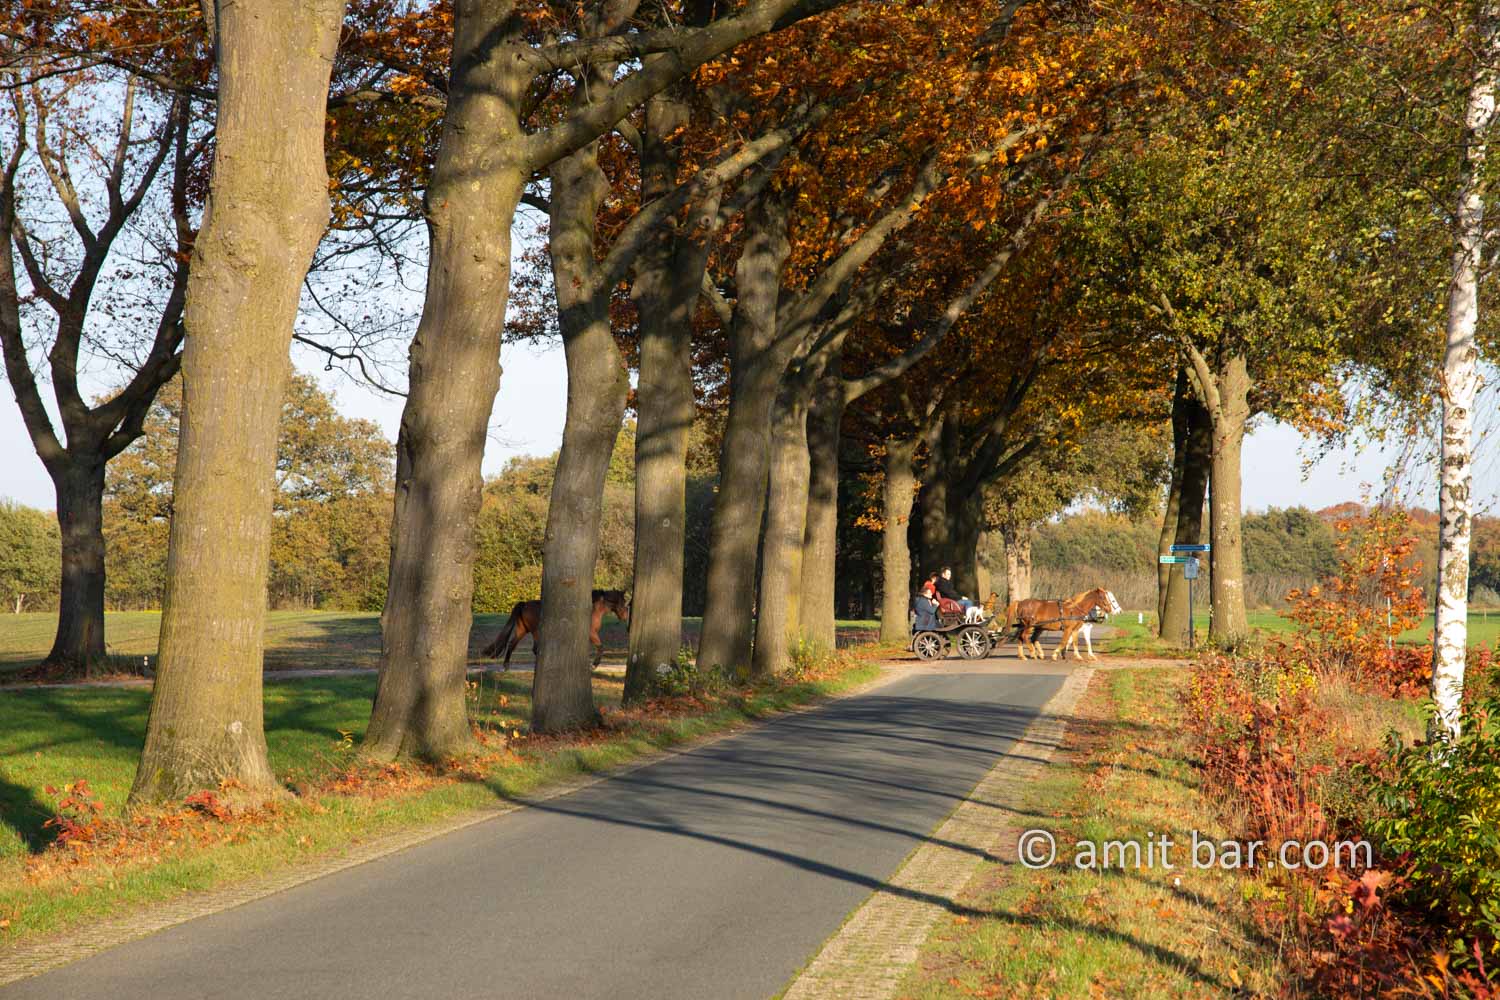 Autumn in De Achterhoek V: Lanes of oak trees getting orange color